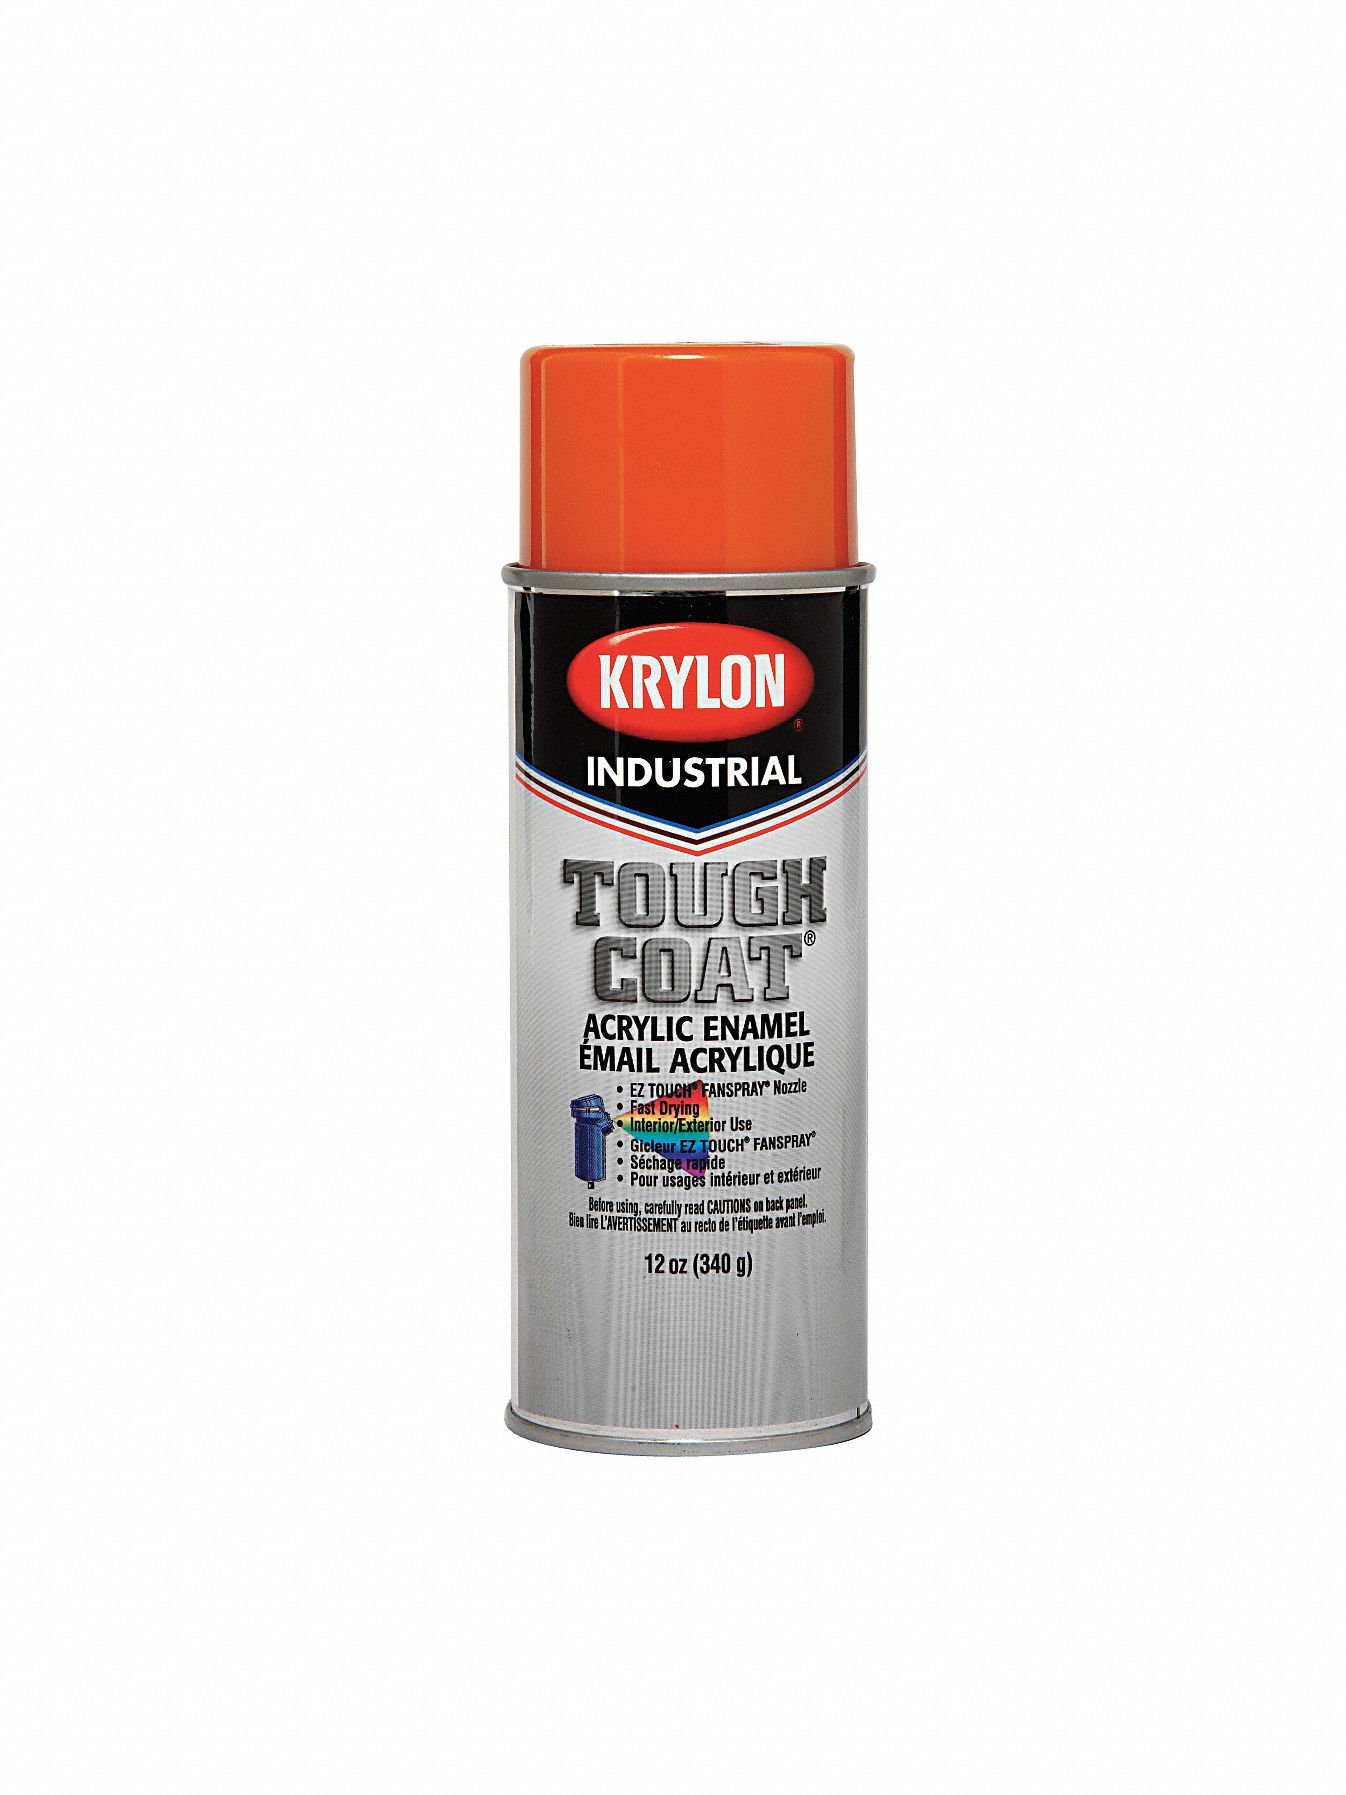 KRYLON INDUSTRIAL Tough Coat Spray Paint in Gloss Orange